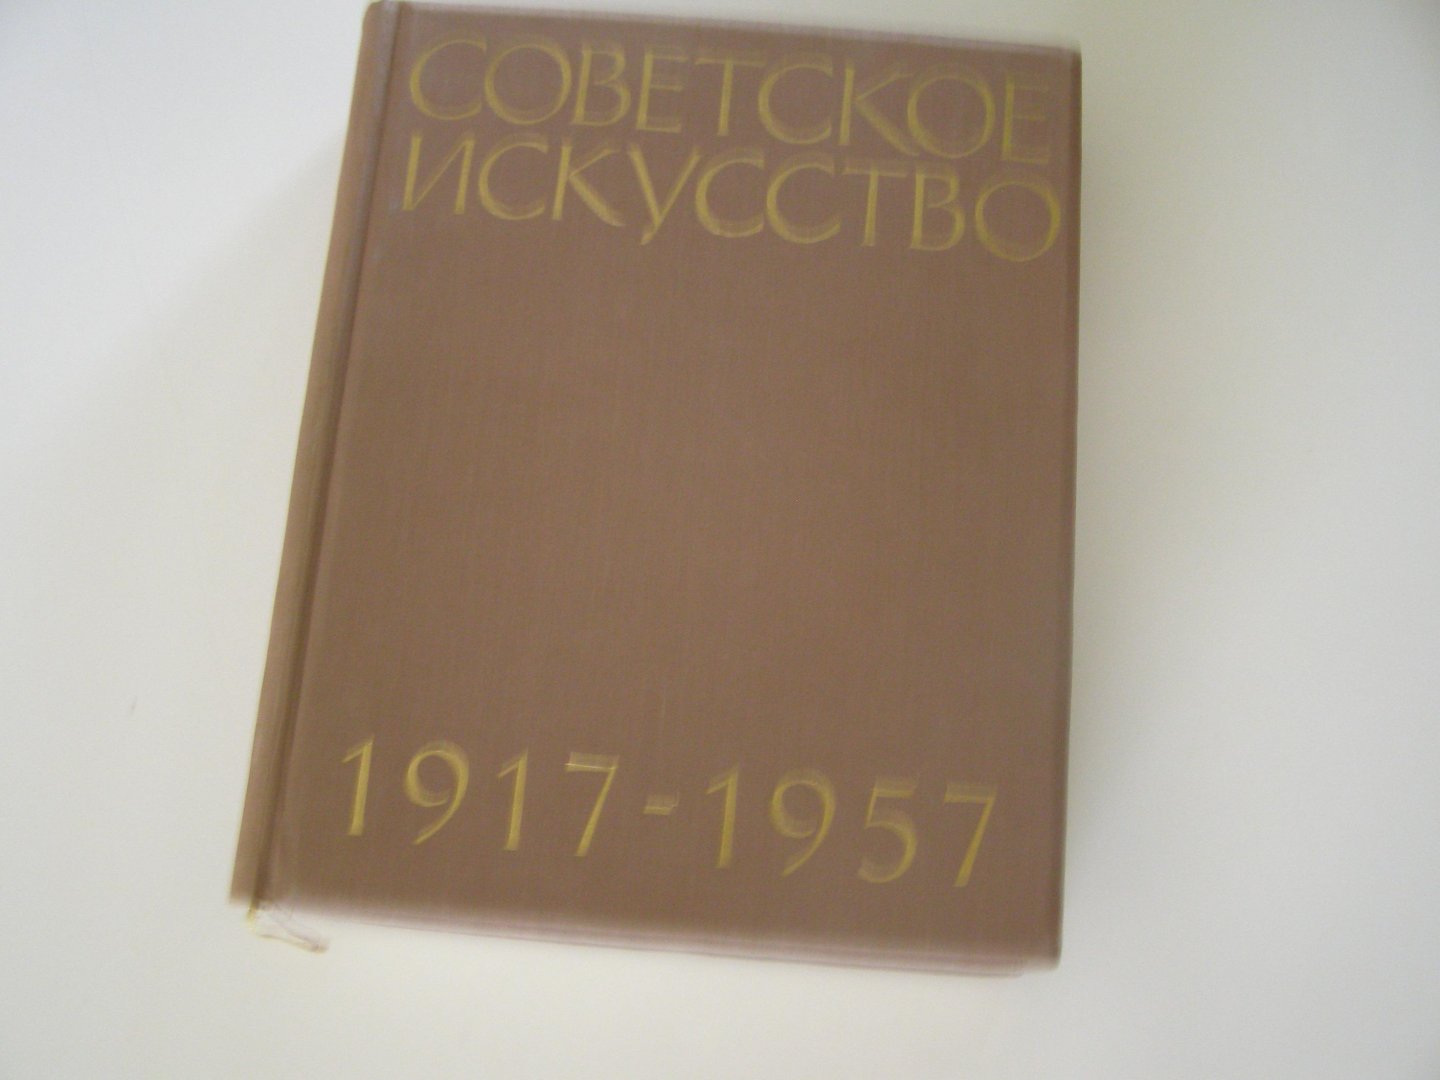  - Soviet Kunst 1917 - 1957